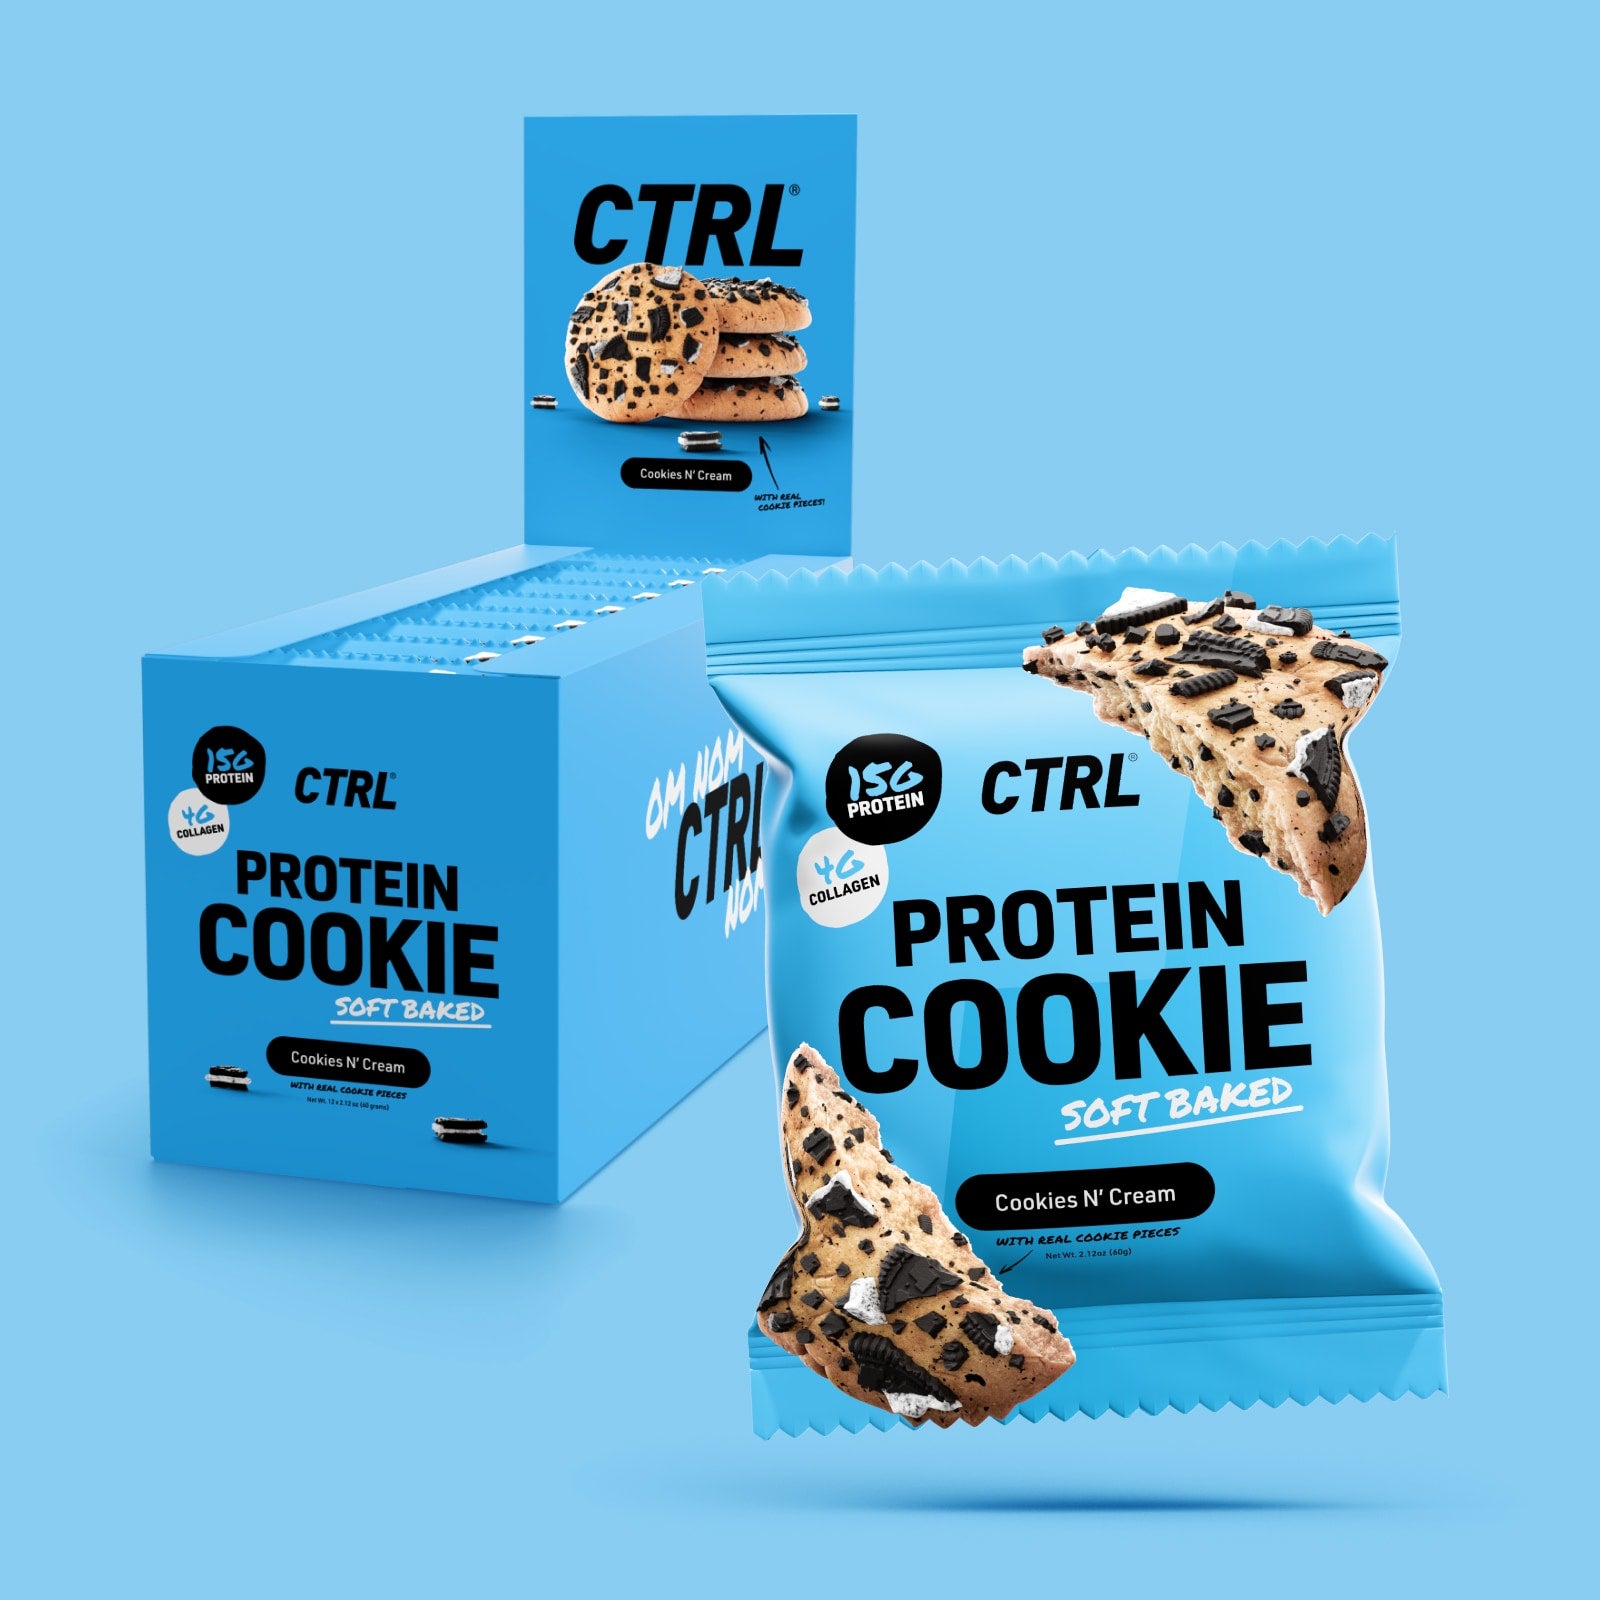 Cookies N' Cream I Protein Cookie I CTRL